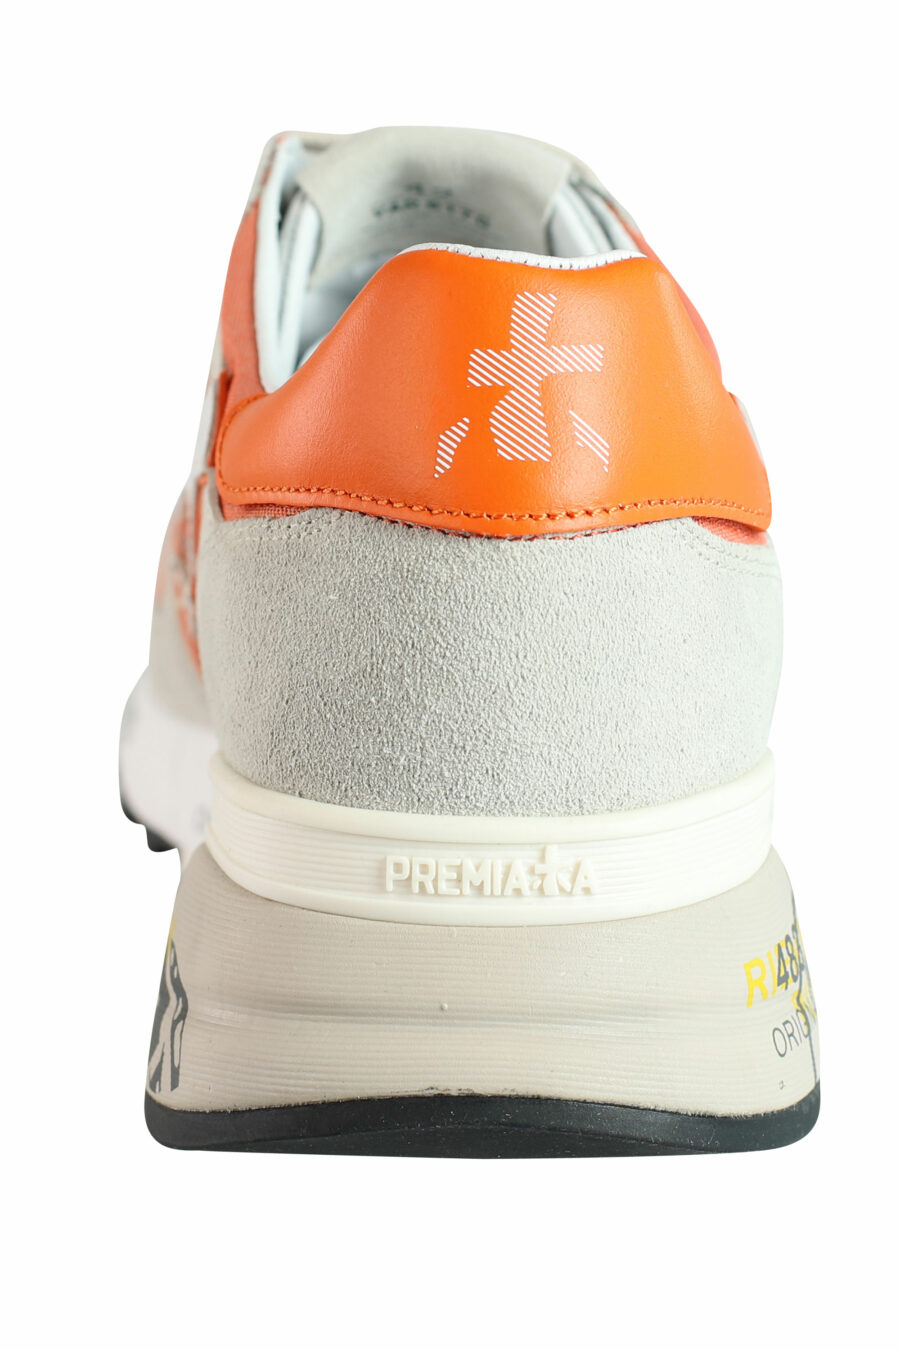 Zapatillas naranja con gris "mick 6170" - IMG 0901